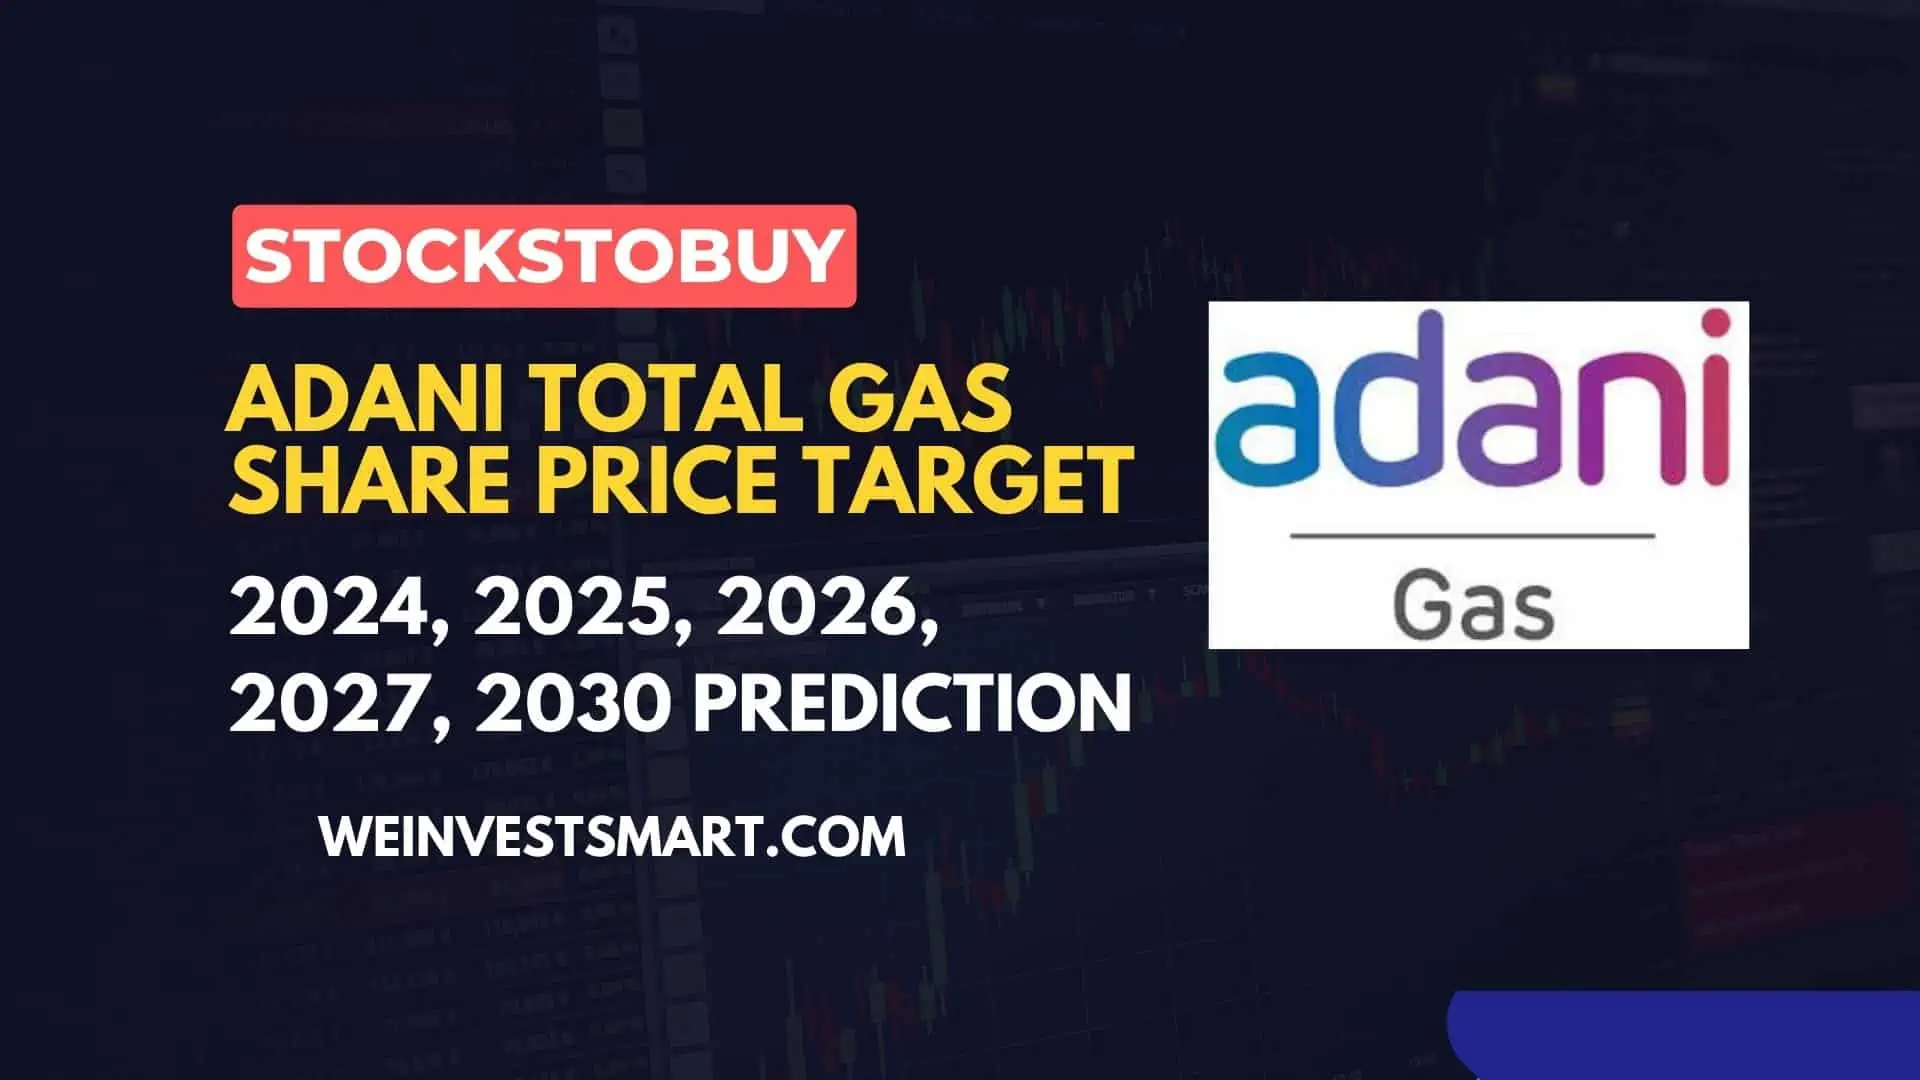 Adani Total Gas share price target 2024, 2025, 2026, 2027, 2030 prediction